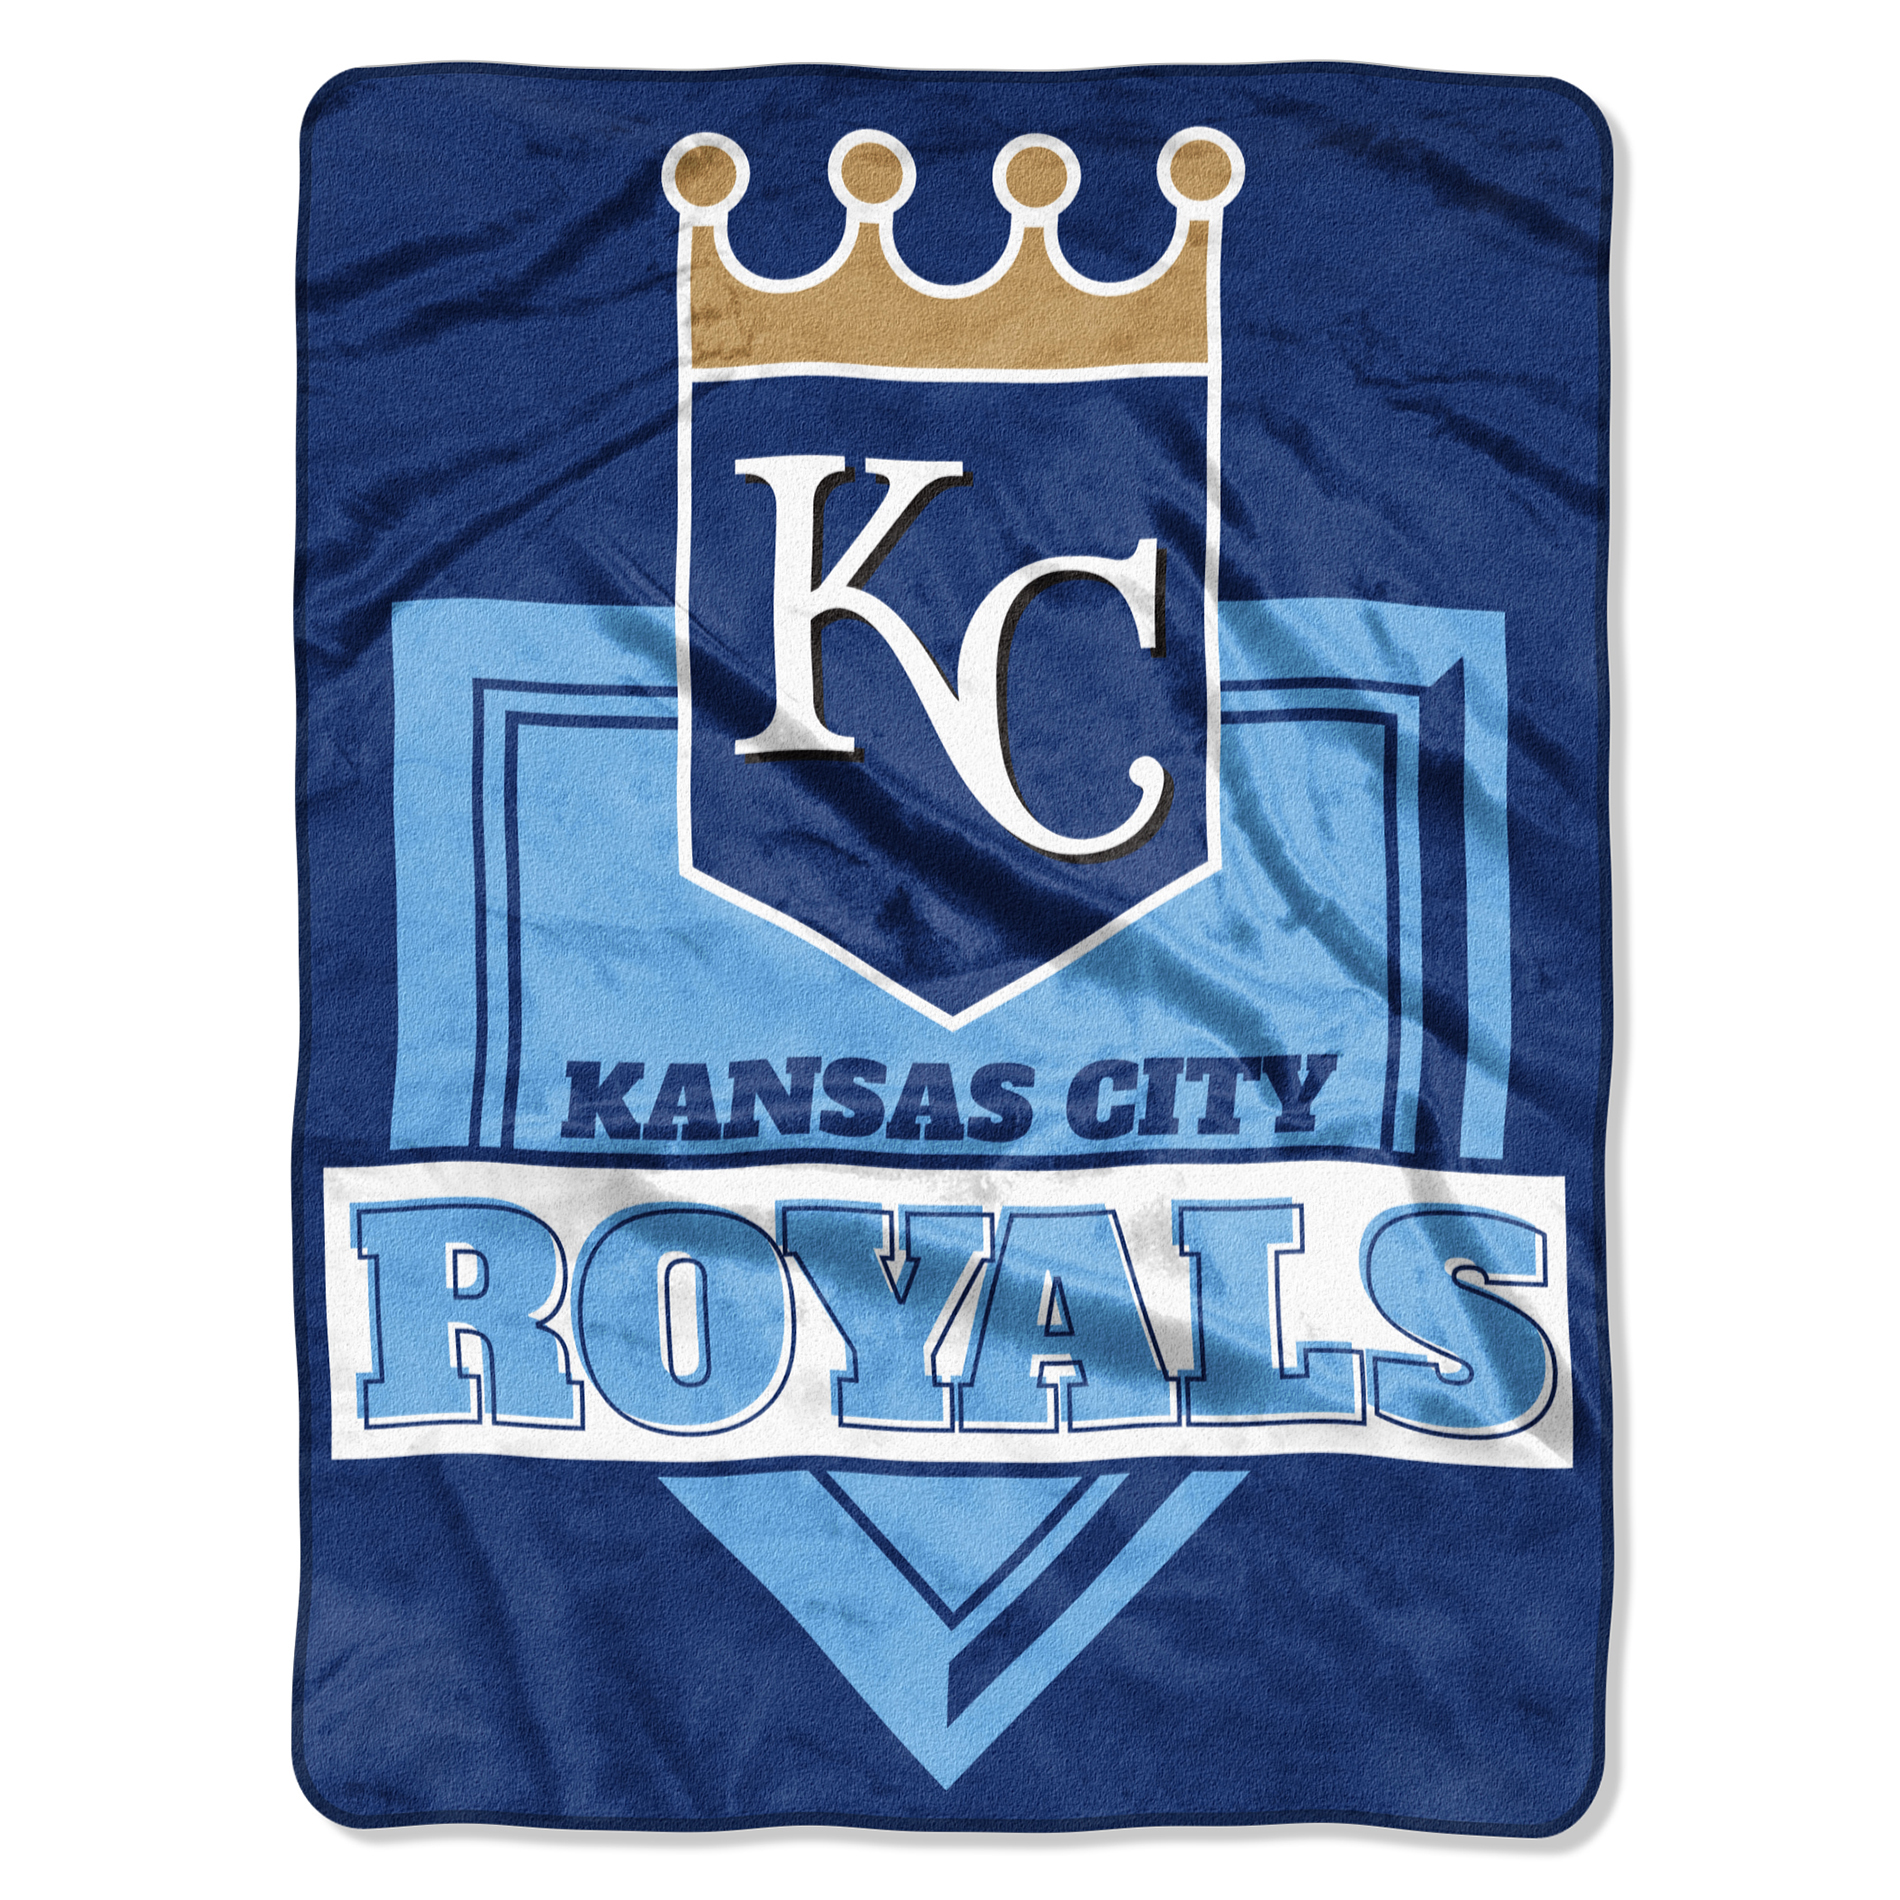 MLB Royal Plush Throw Blanket - Kansas City Royals